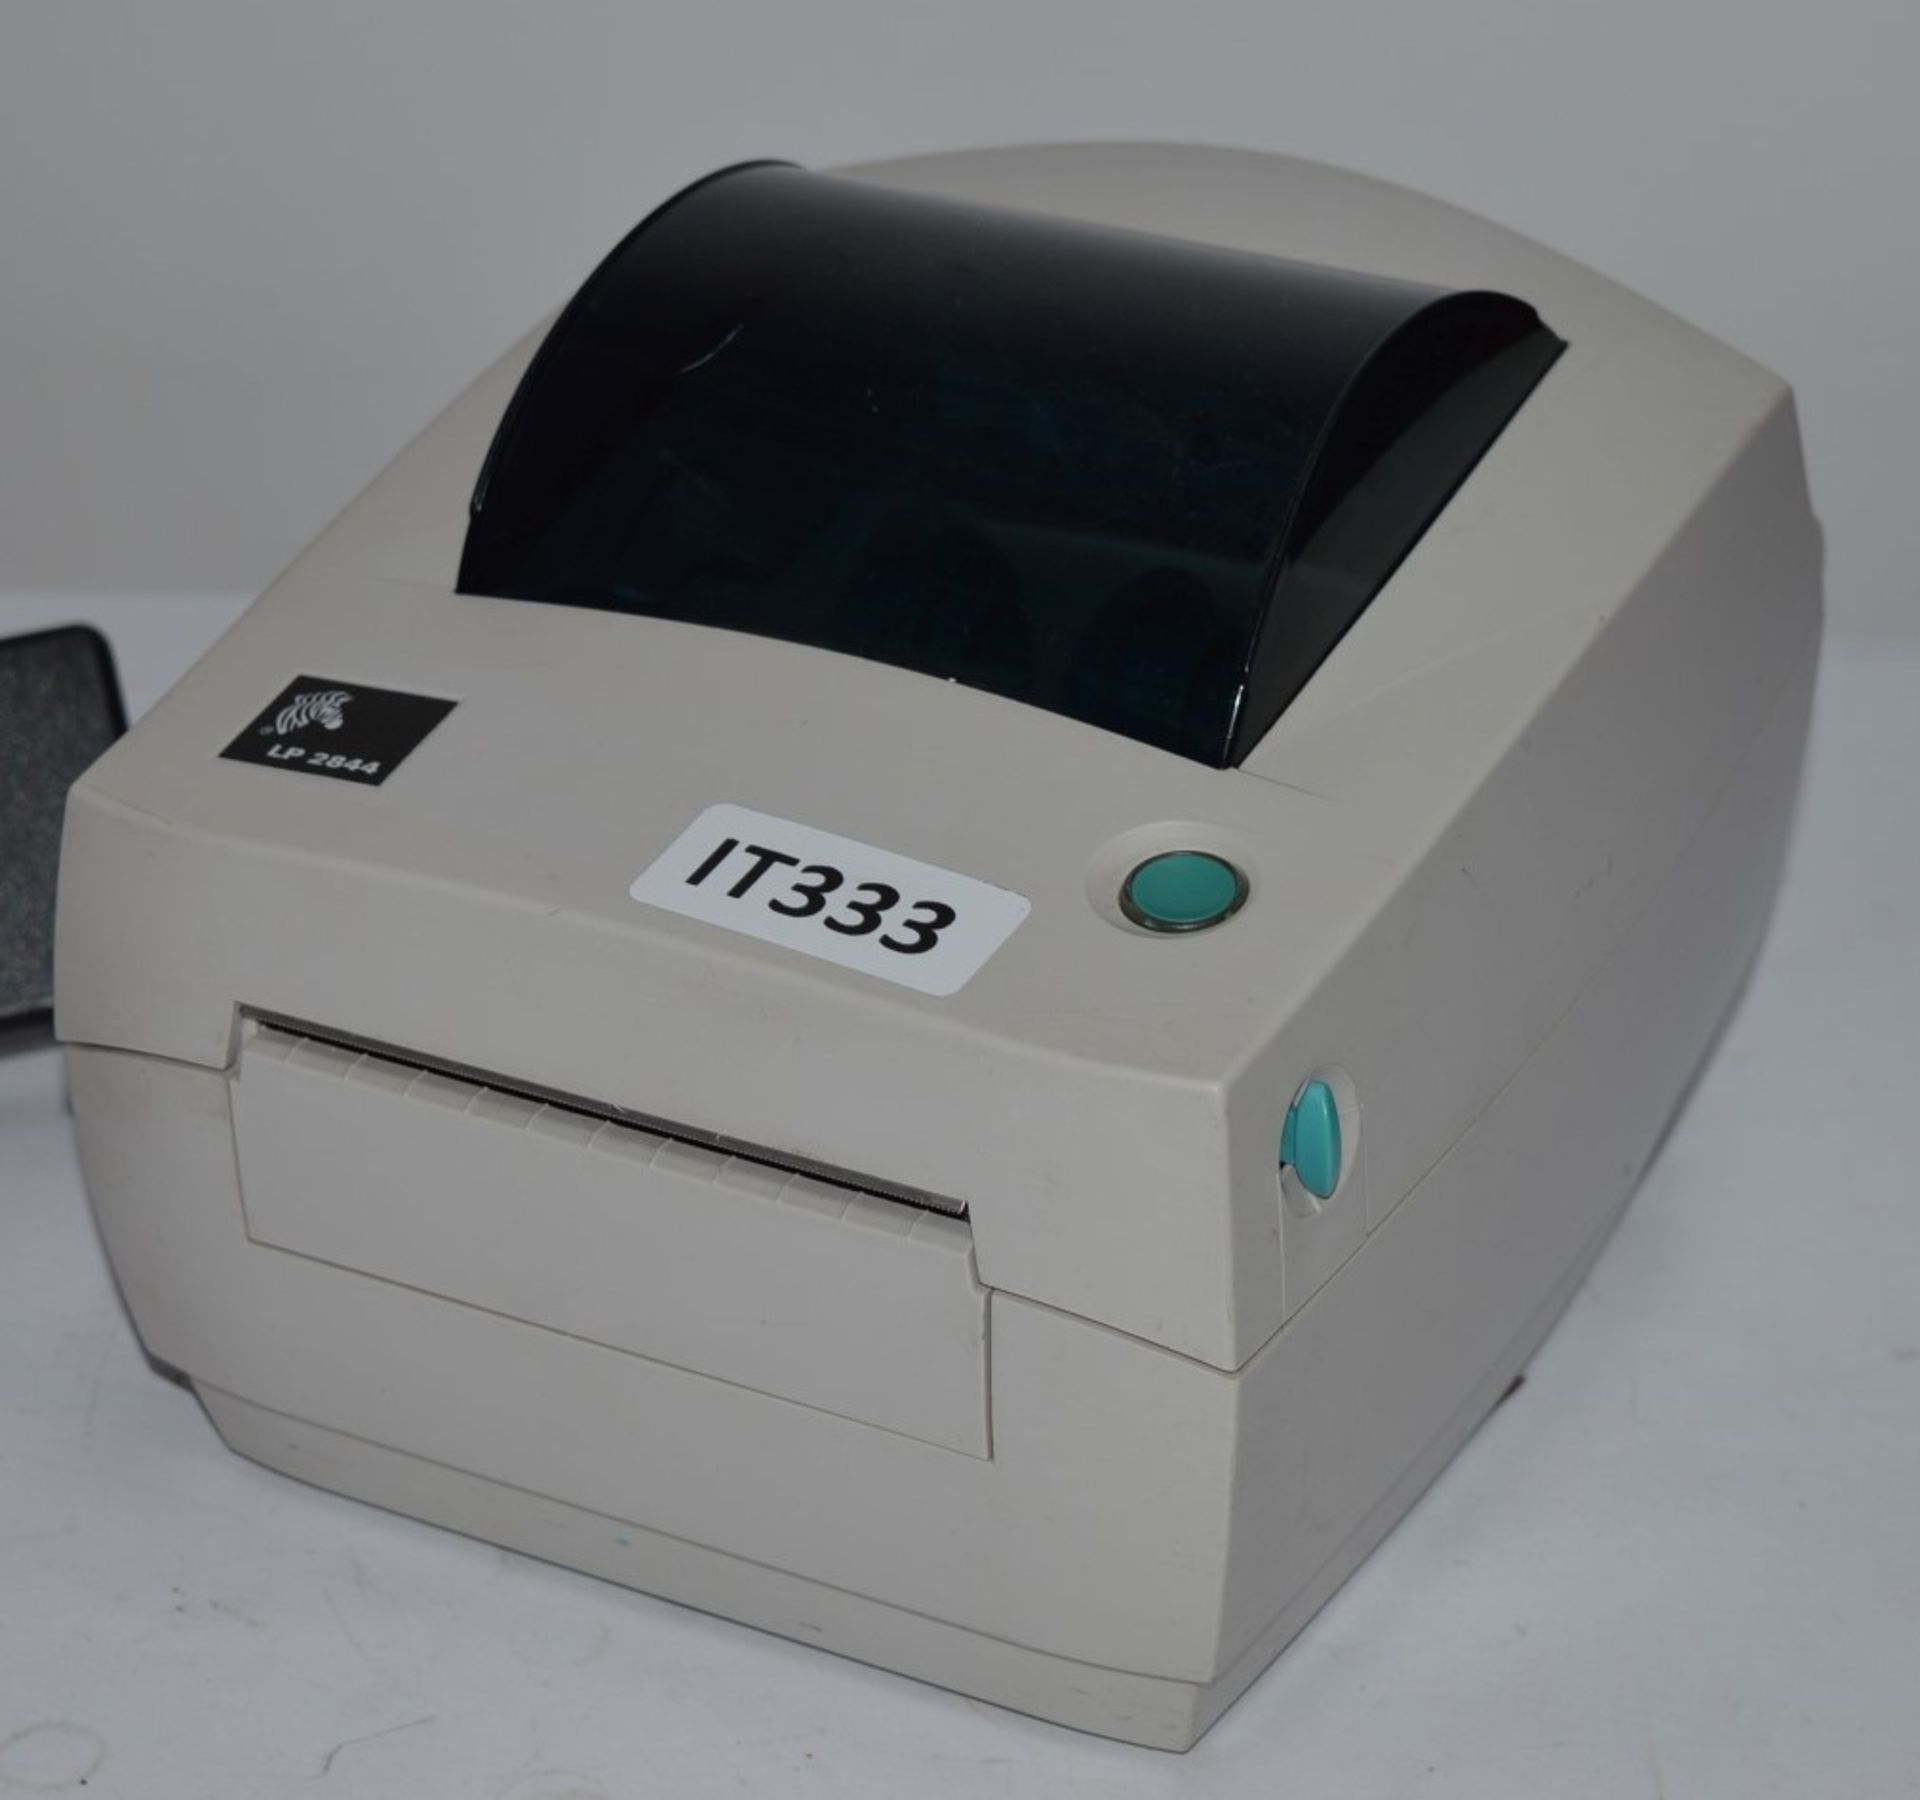 1 x Zebra LP2844 Direct Thermal Label Printer - CL011 - Ref IT333 - Location: Altrincham WA14 - - Image 2 of 6